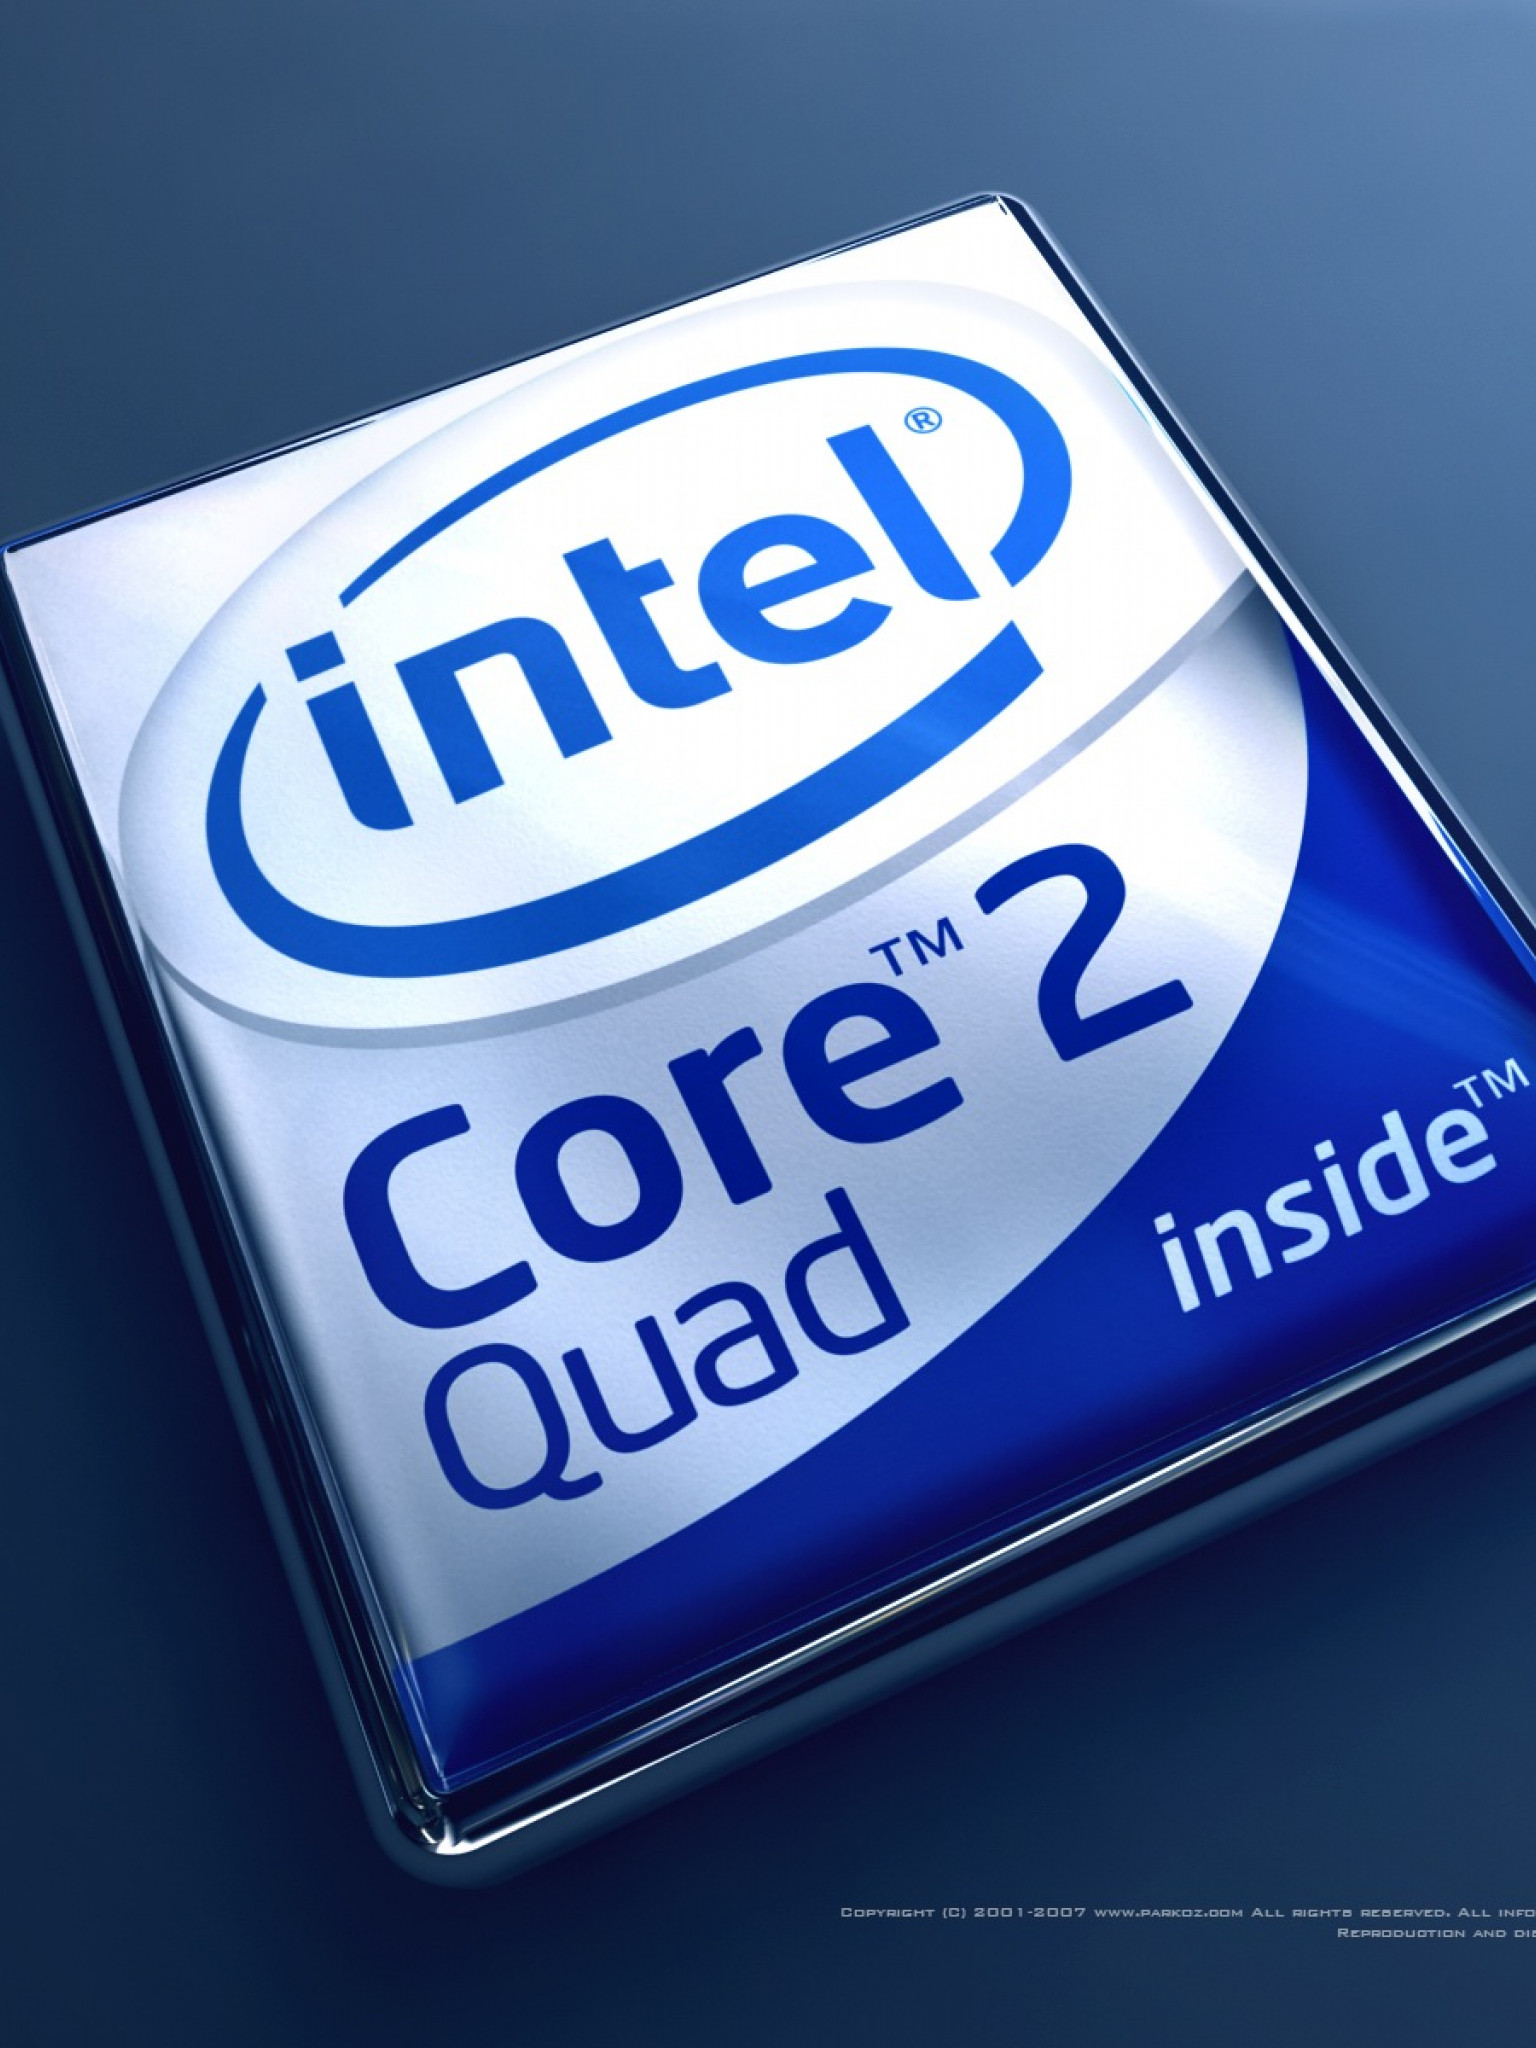 Intel Core 2 Quad.jpg